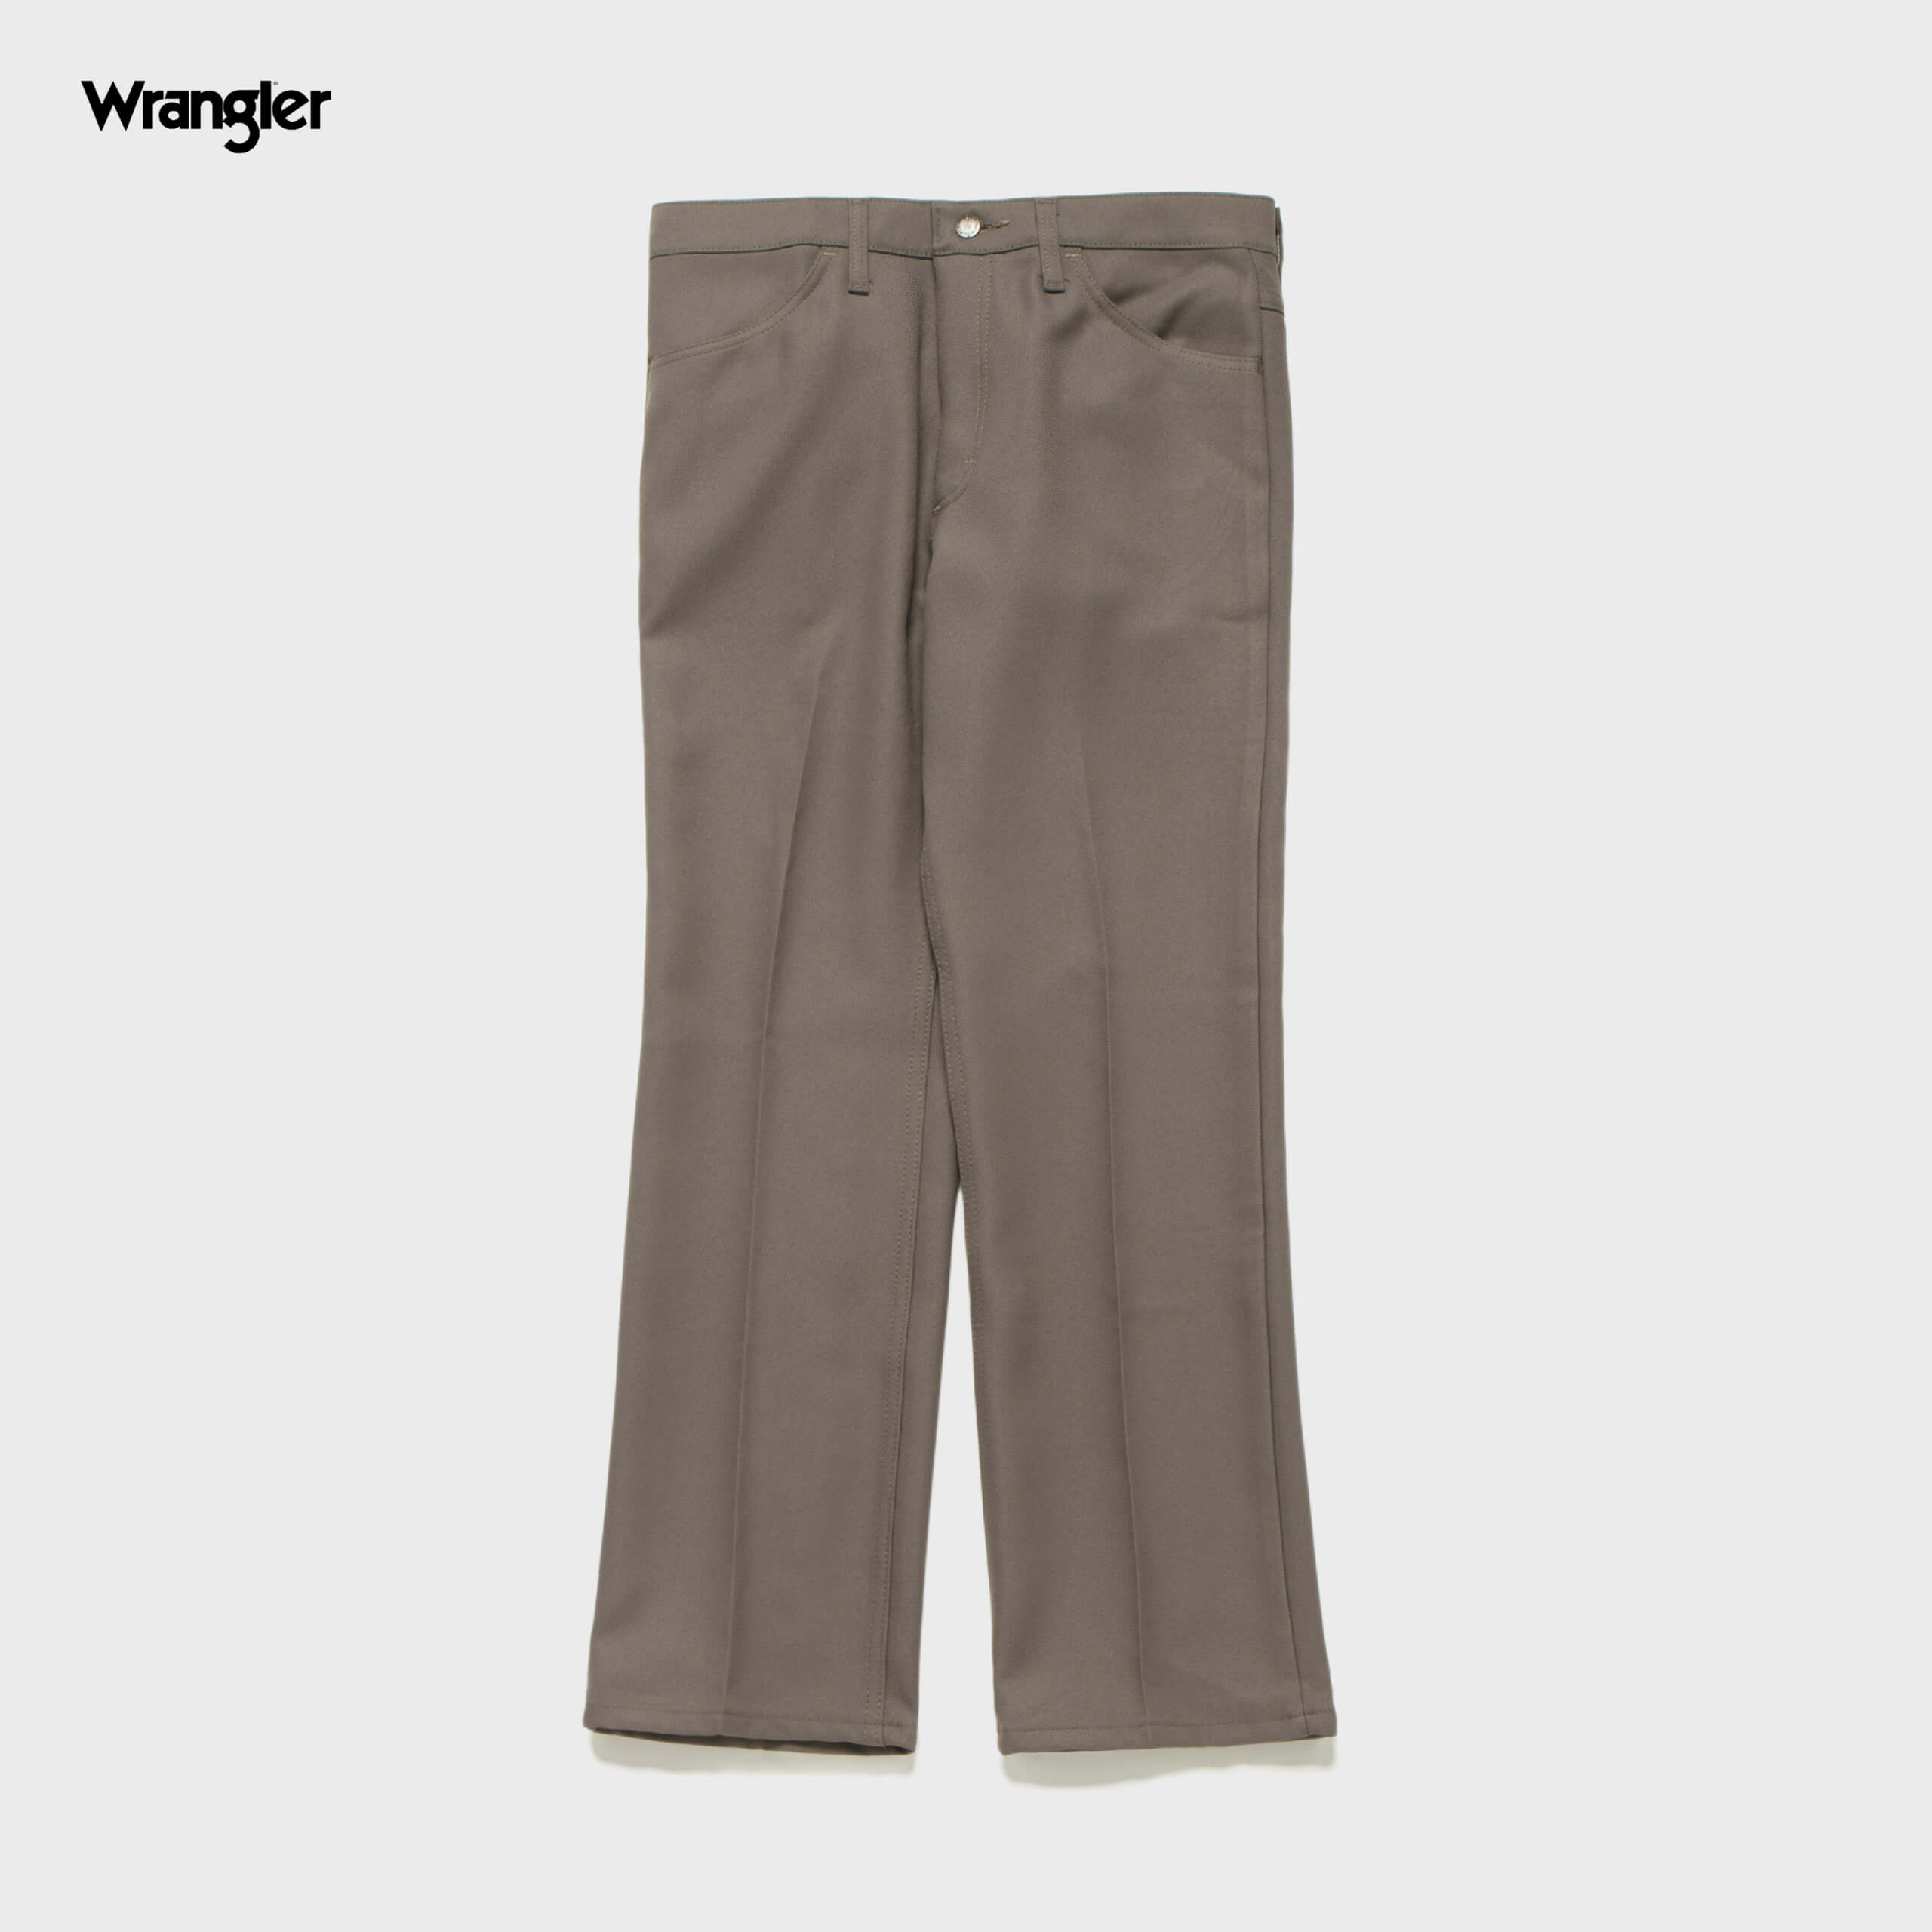 wrangler-wrancher-dress-jeans-brich_p2